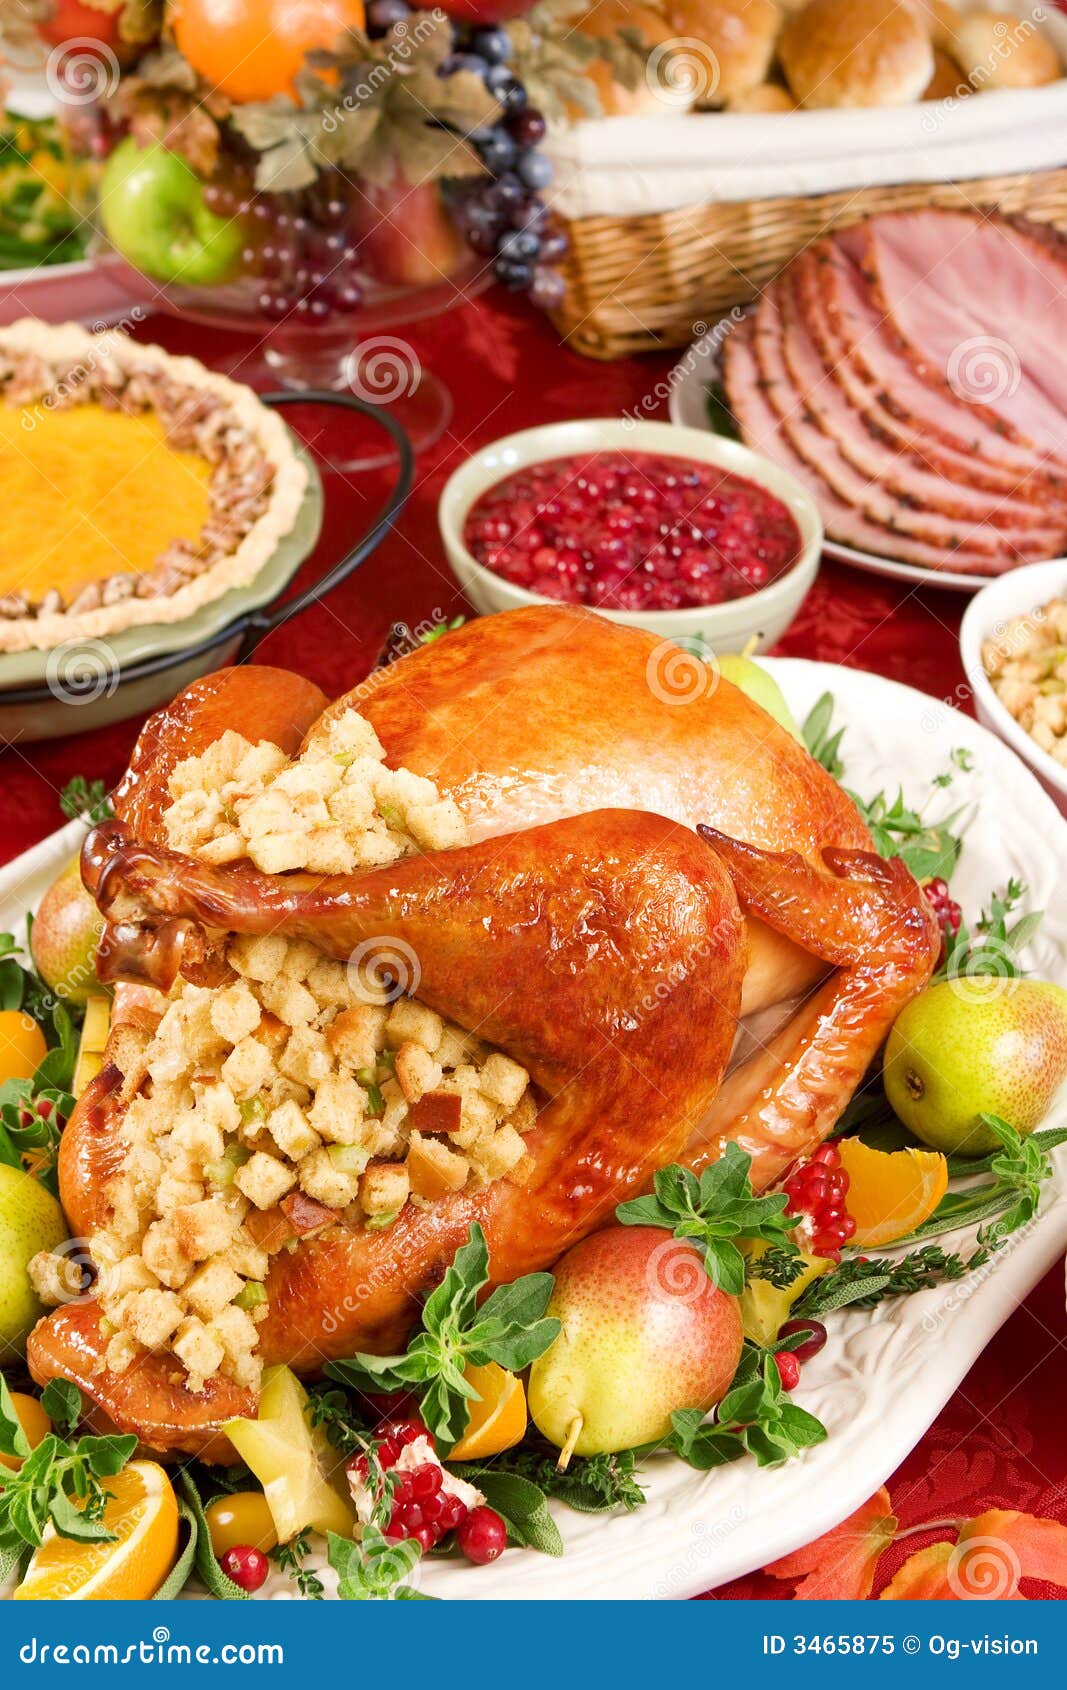 Turkey dinner stock image. Image of rolls, roast, chutney - 3465875